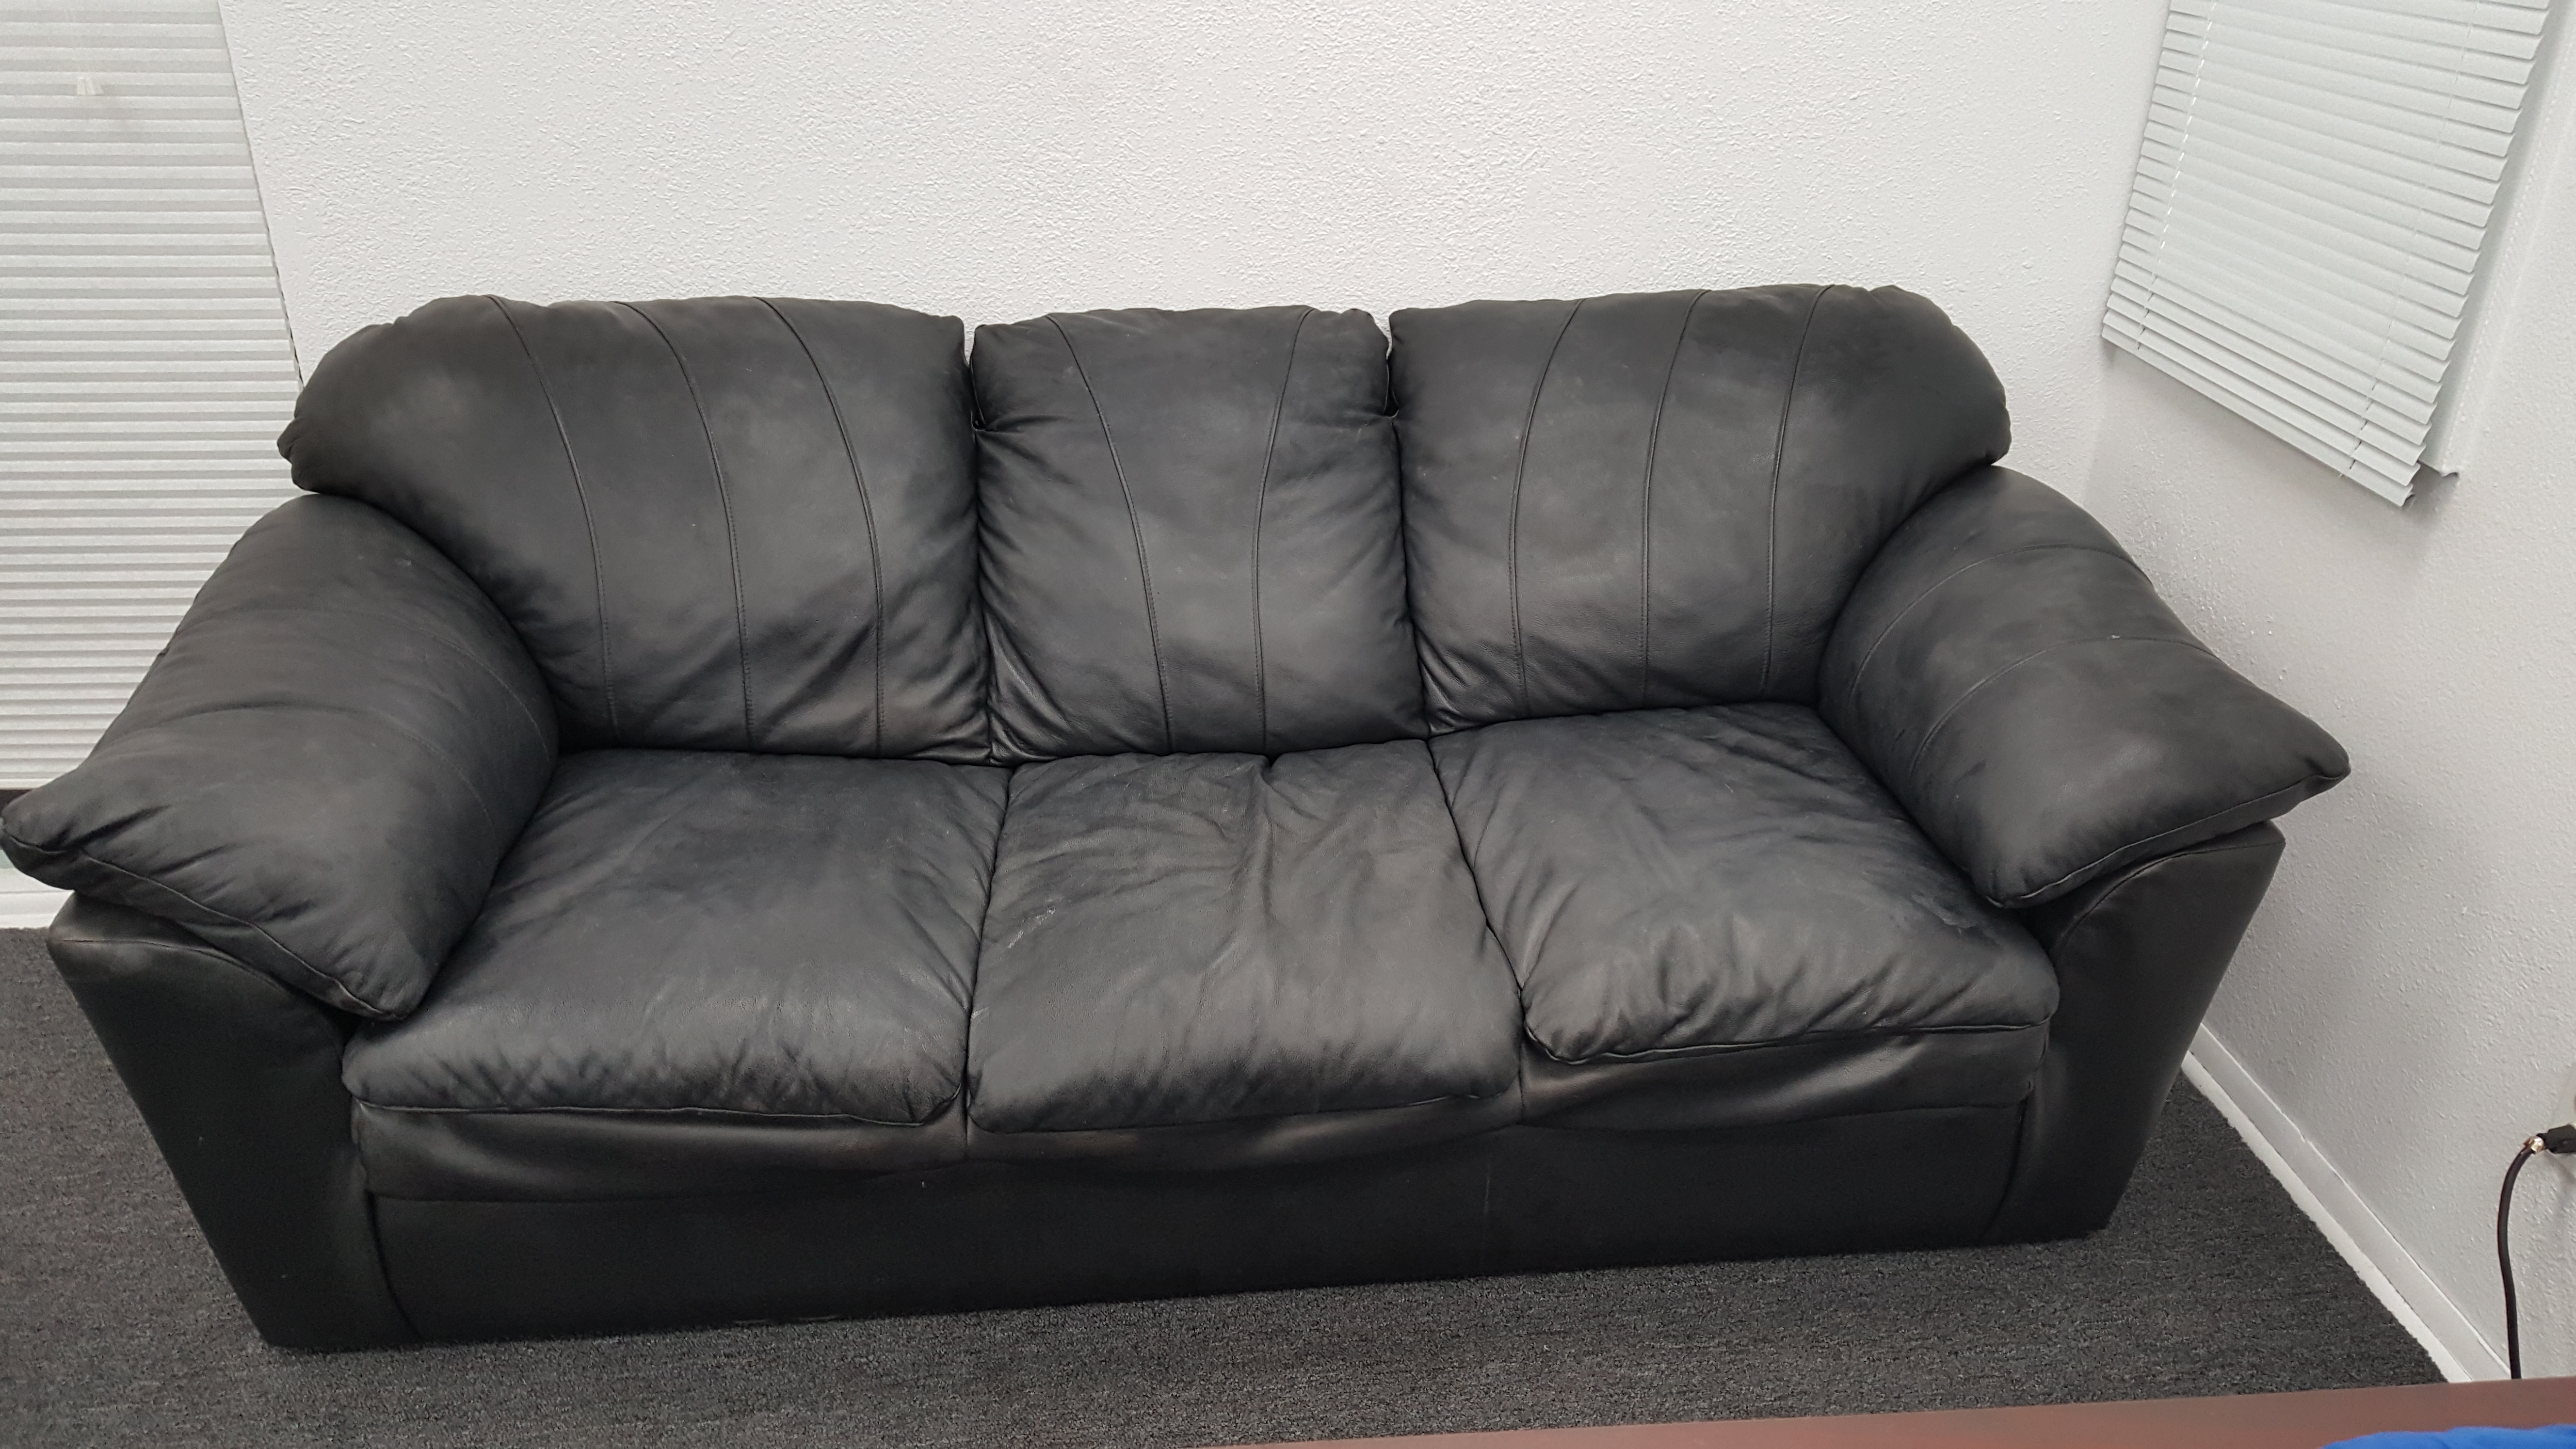 Backroom_Casting_Couch,_Original,_Scottsdale,_AZ.jpg